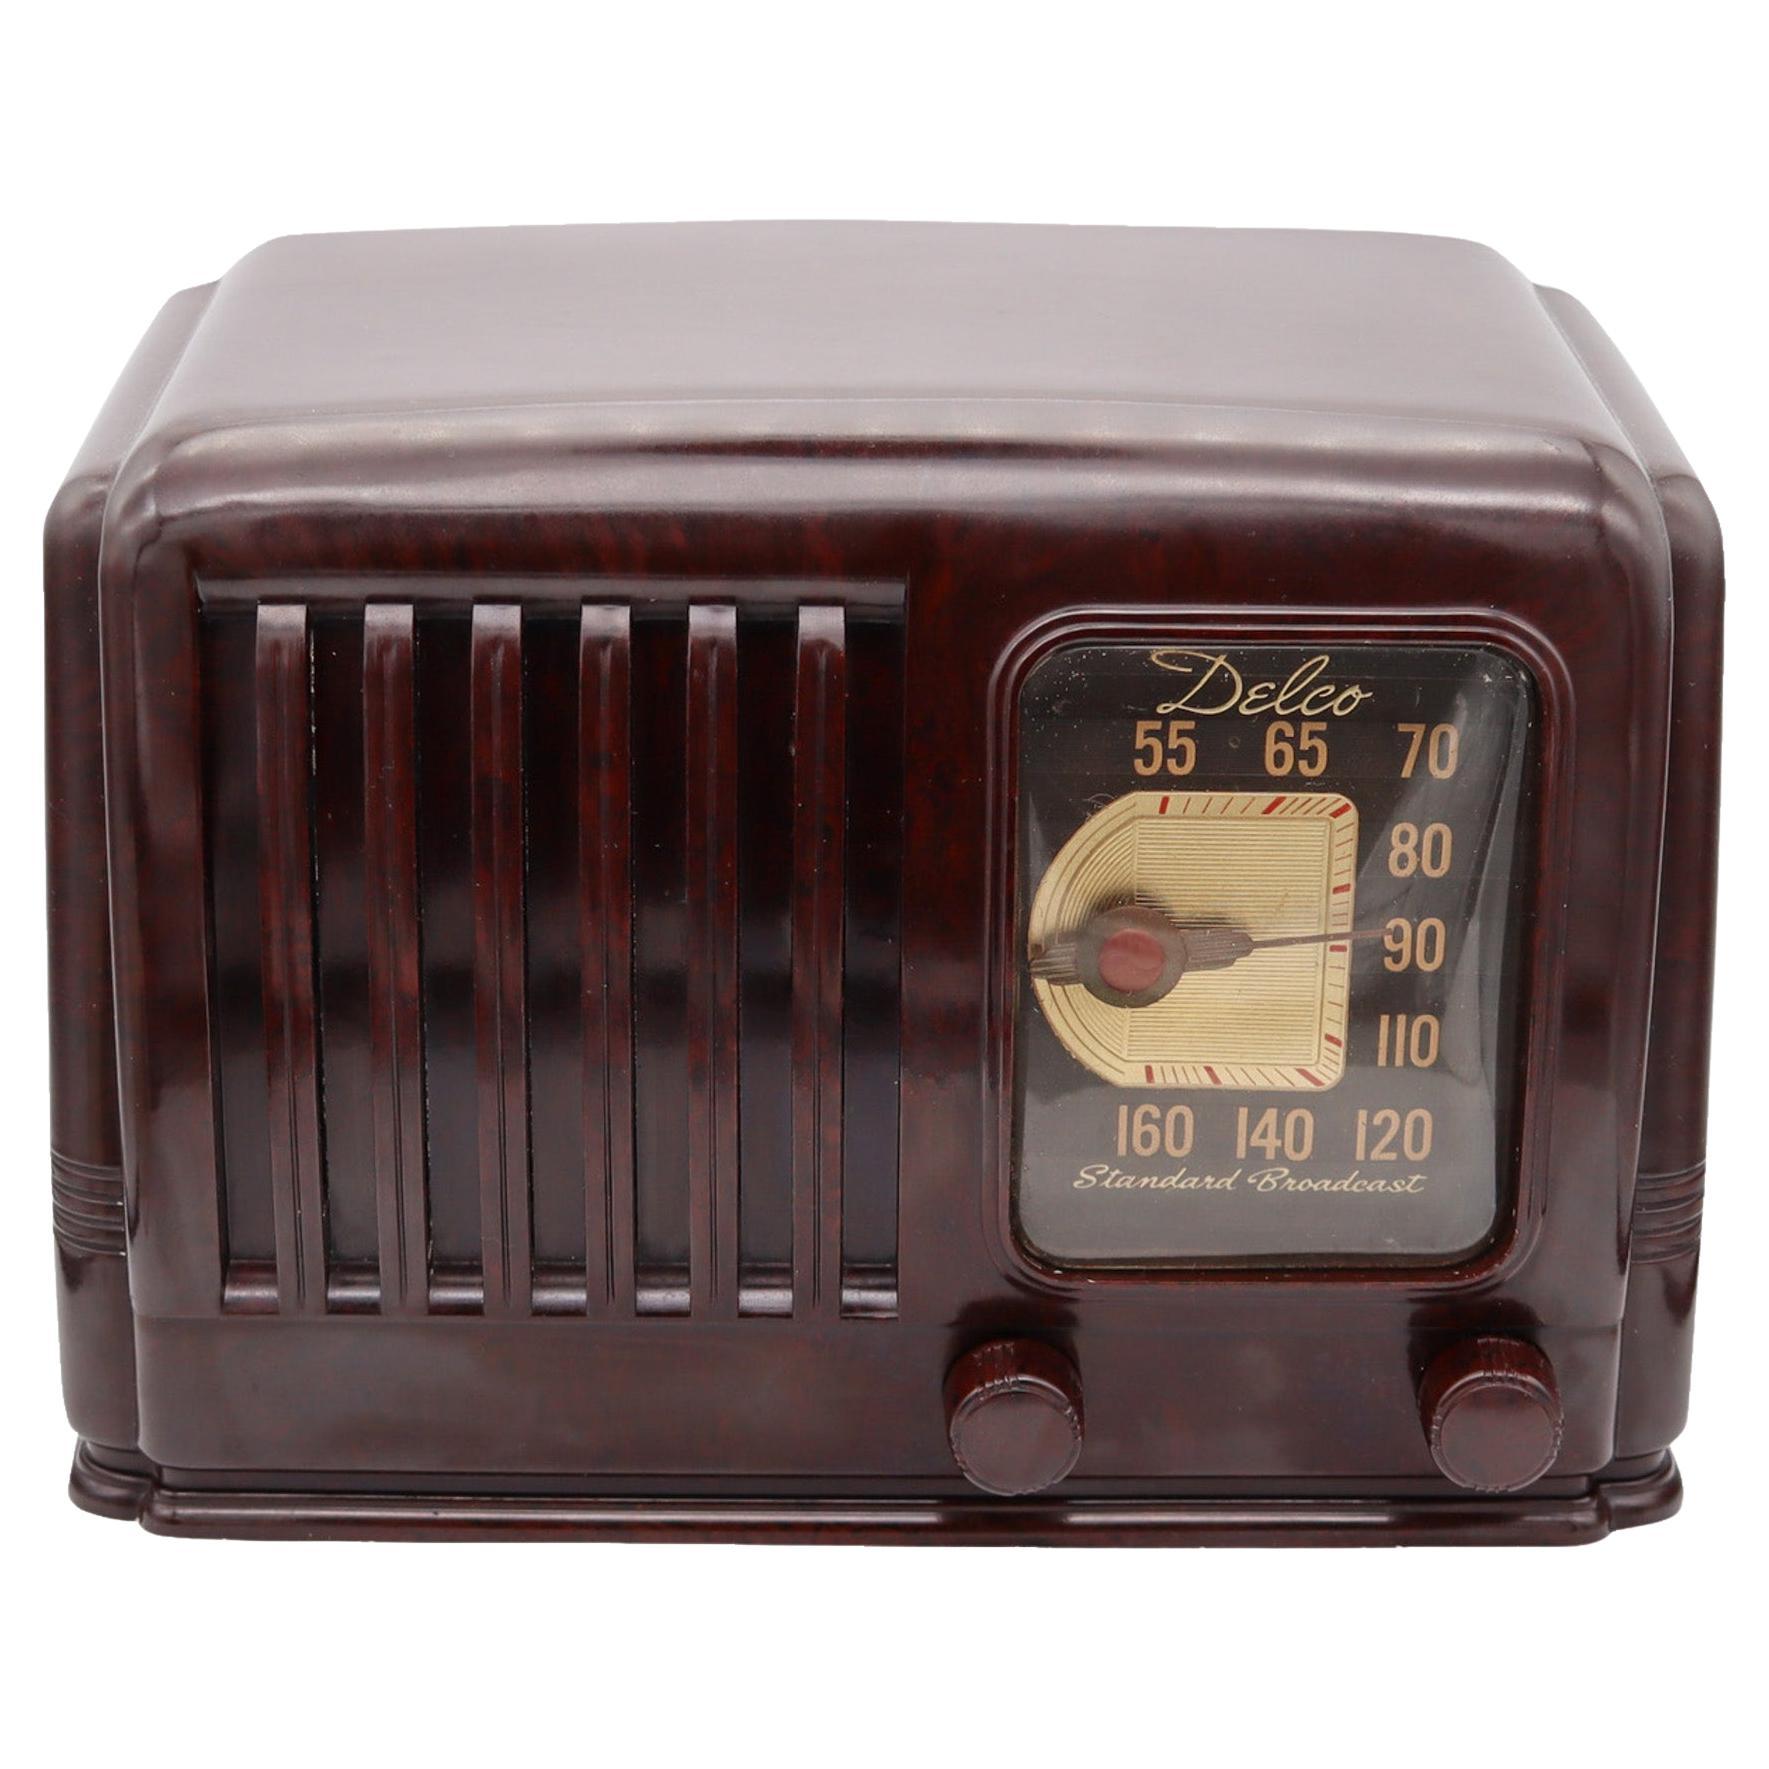 Delco Art Deco 1941 Vintage Bakelit R 1171 Röhren Radio in perfektem Zustand